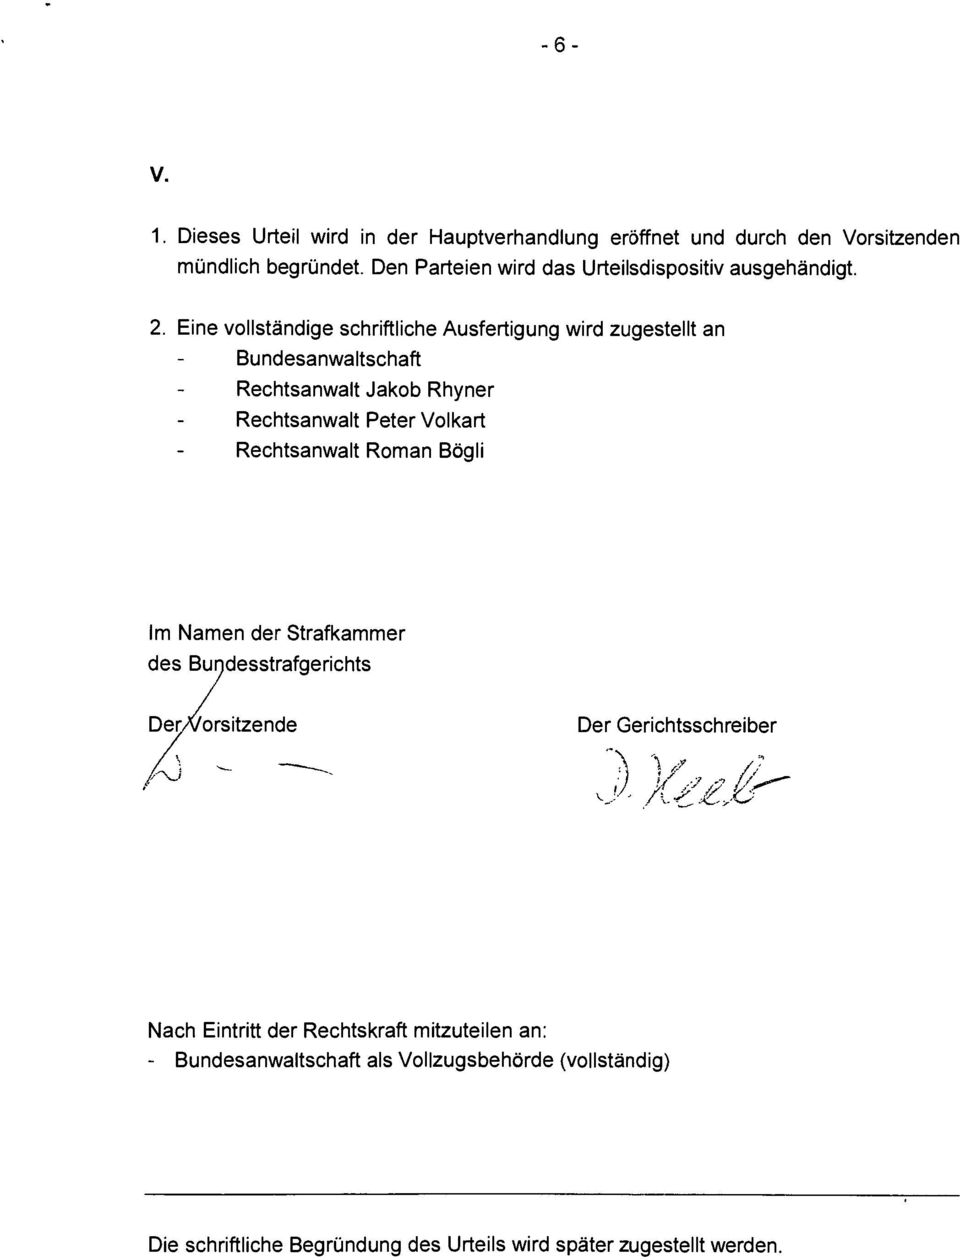 Eine vollständige schriftliche Ausfertigung wird zugestellt an Bundesanwaltschaft Rechtsanwalt Jakob Rhyner Rechtsanwalt Peter Volkart